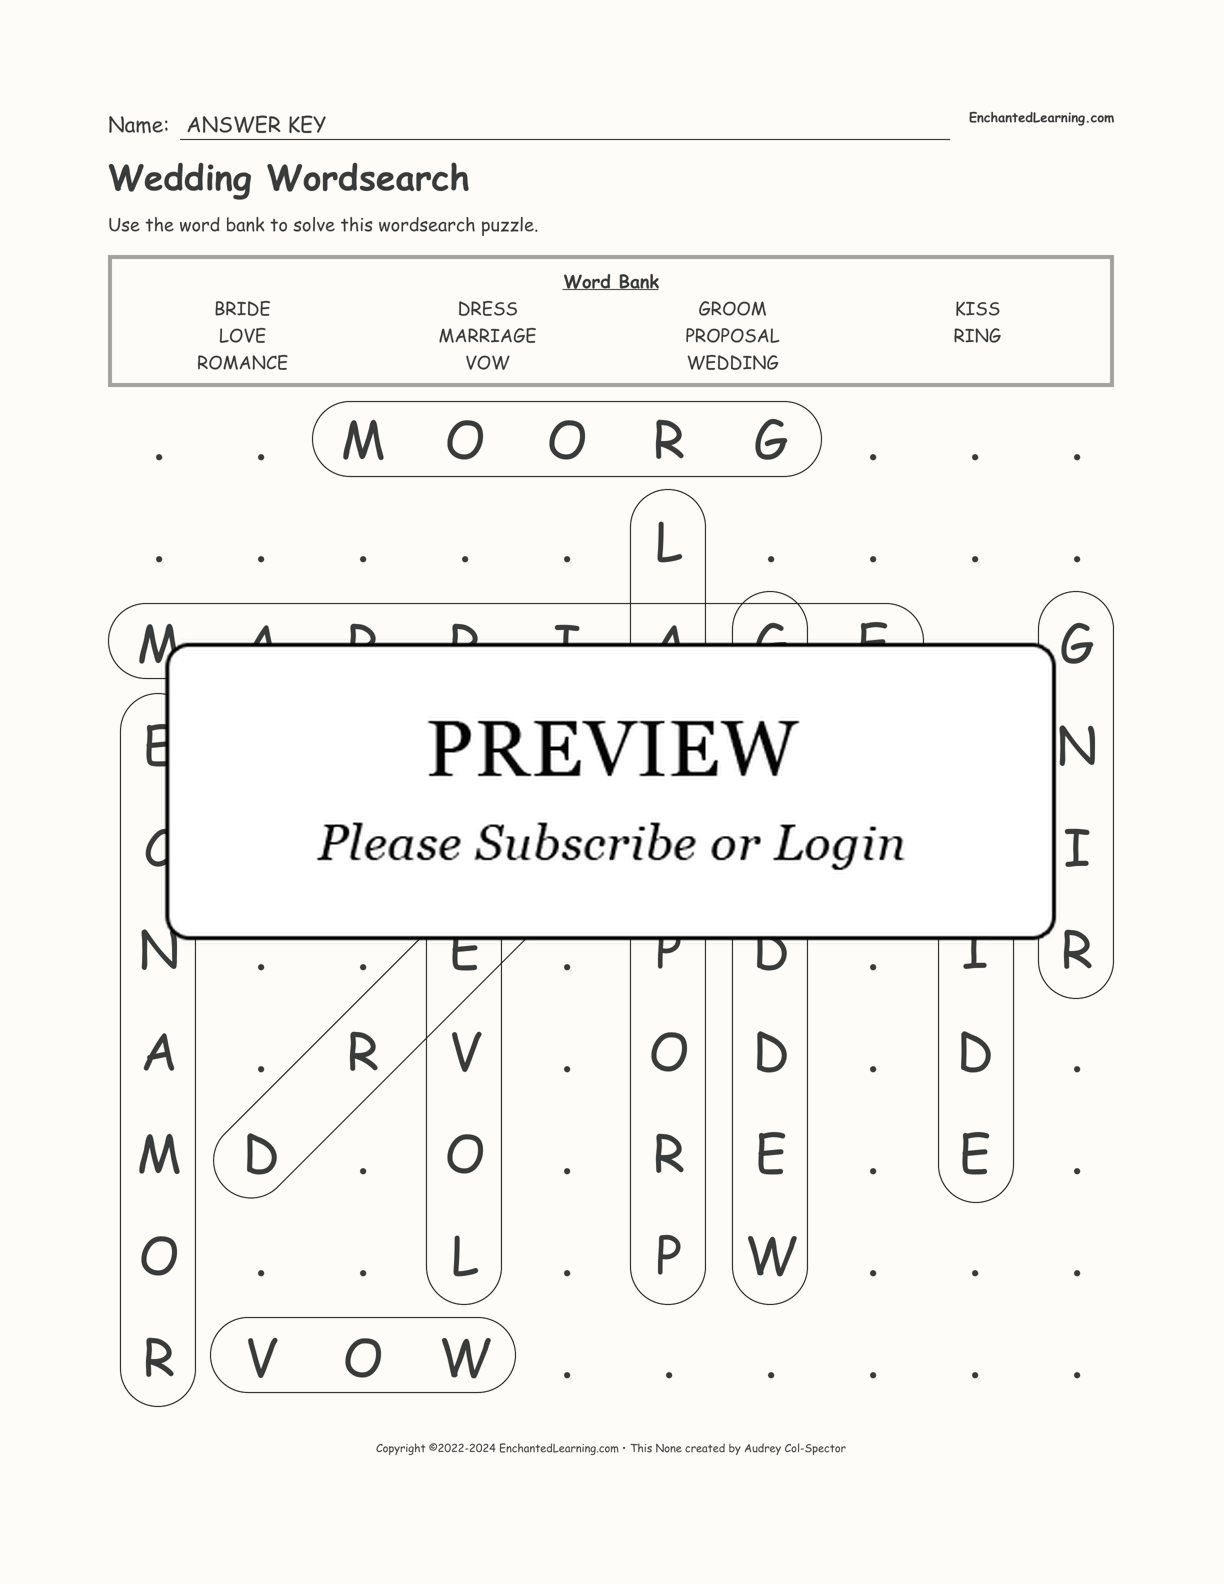 Wedding Wordsearch interactive worksheet page 2